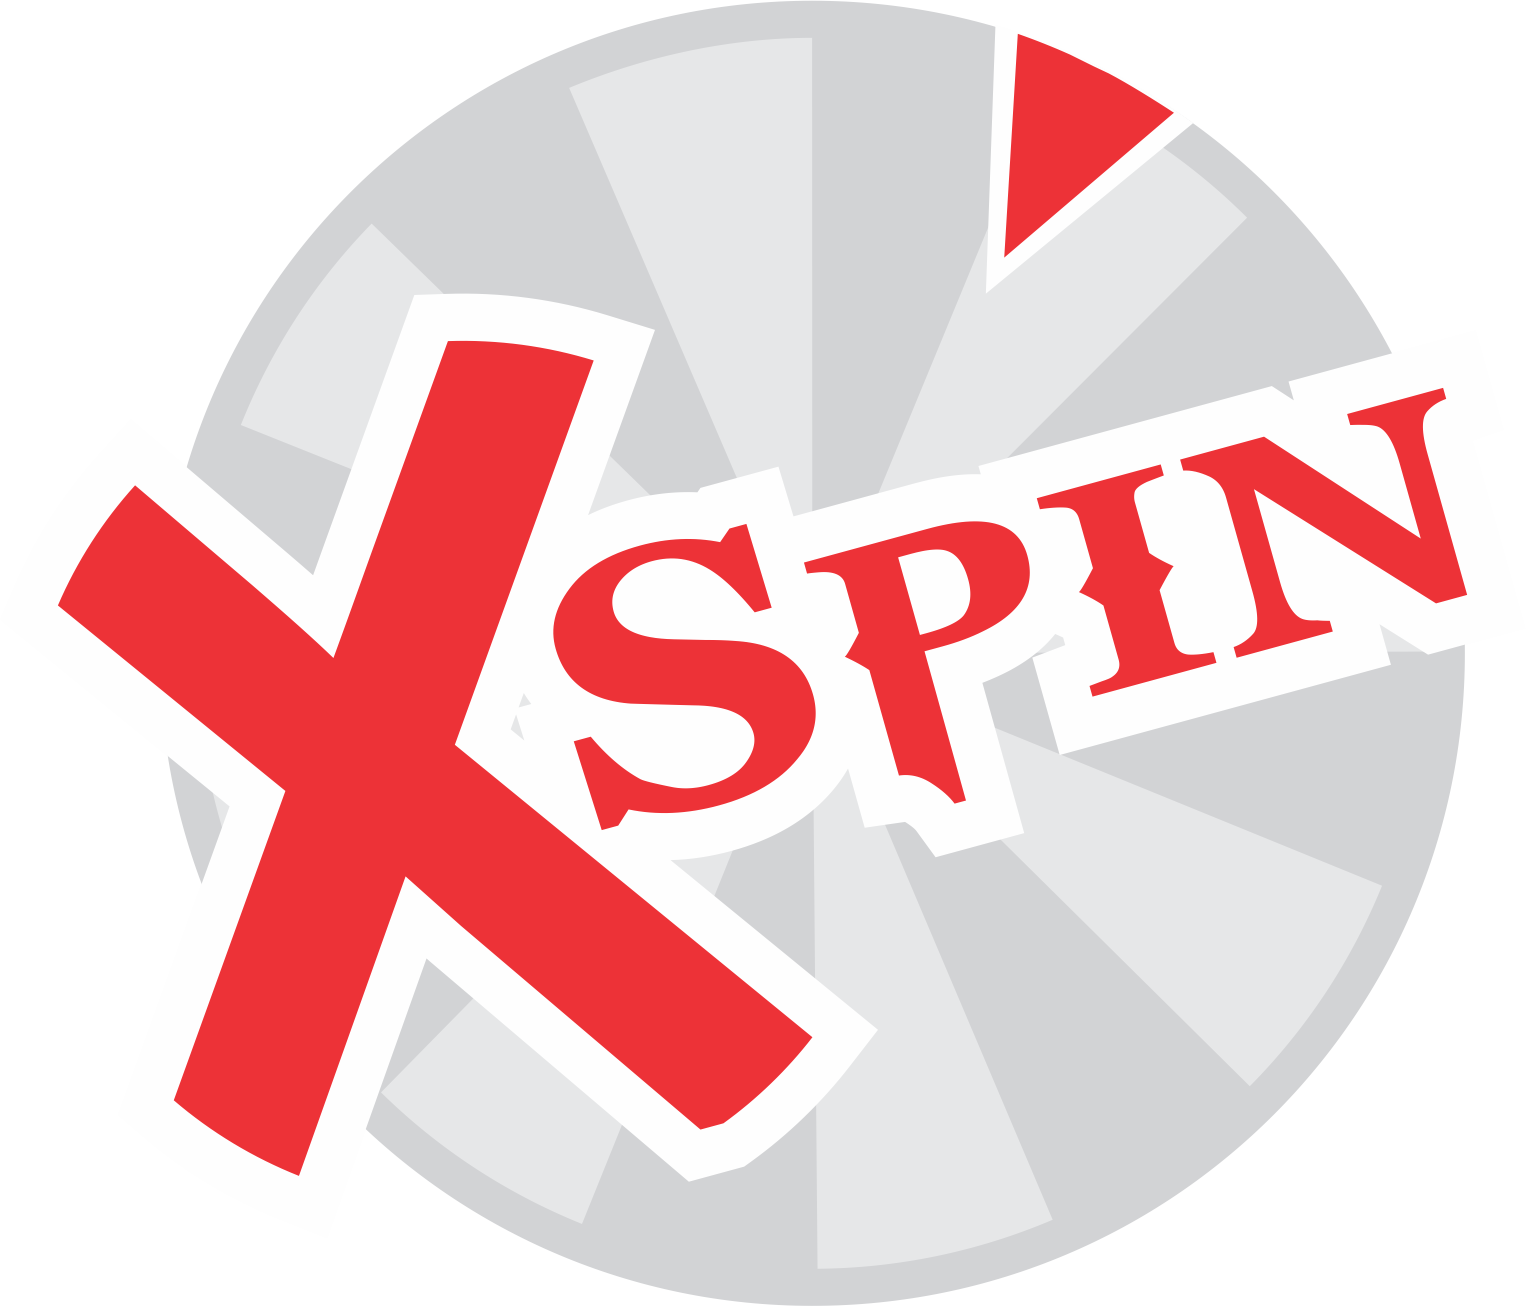 Xep Logo